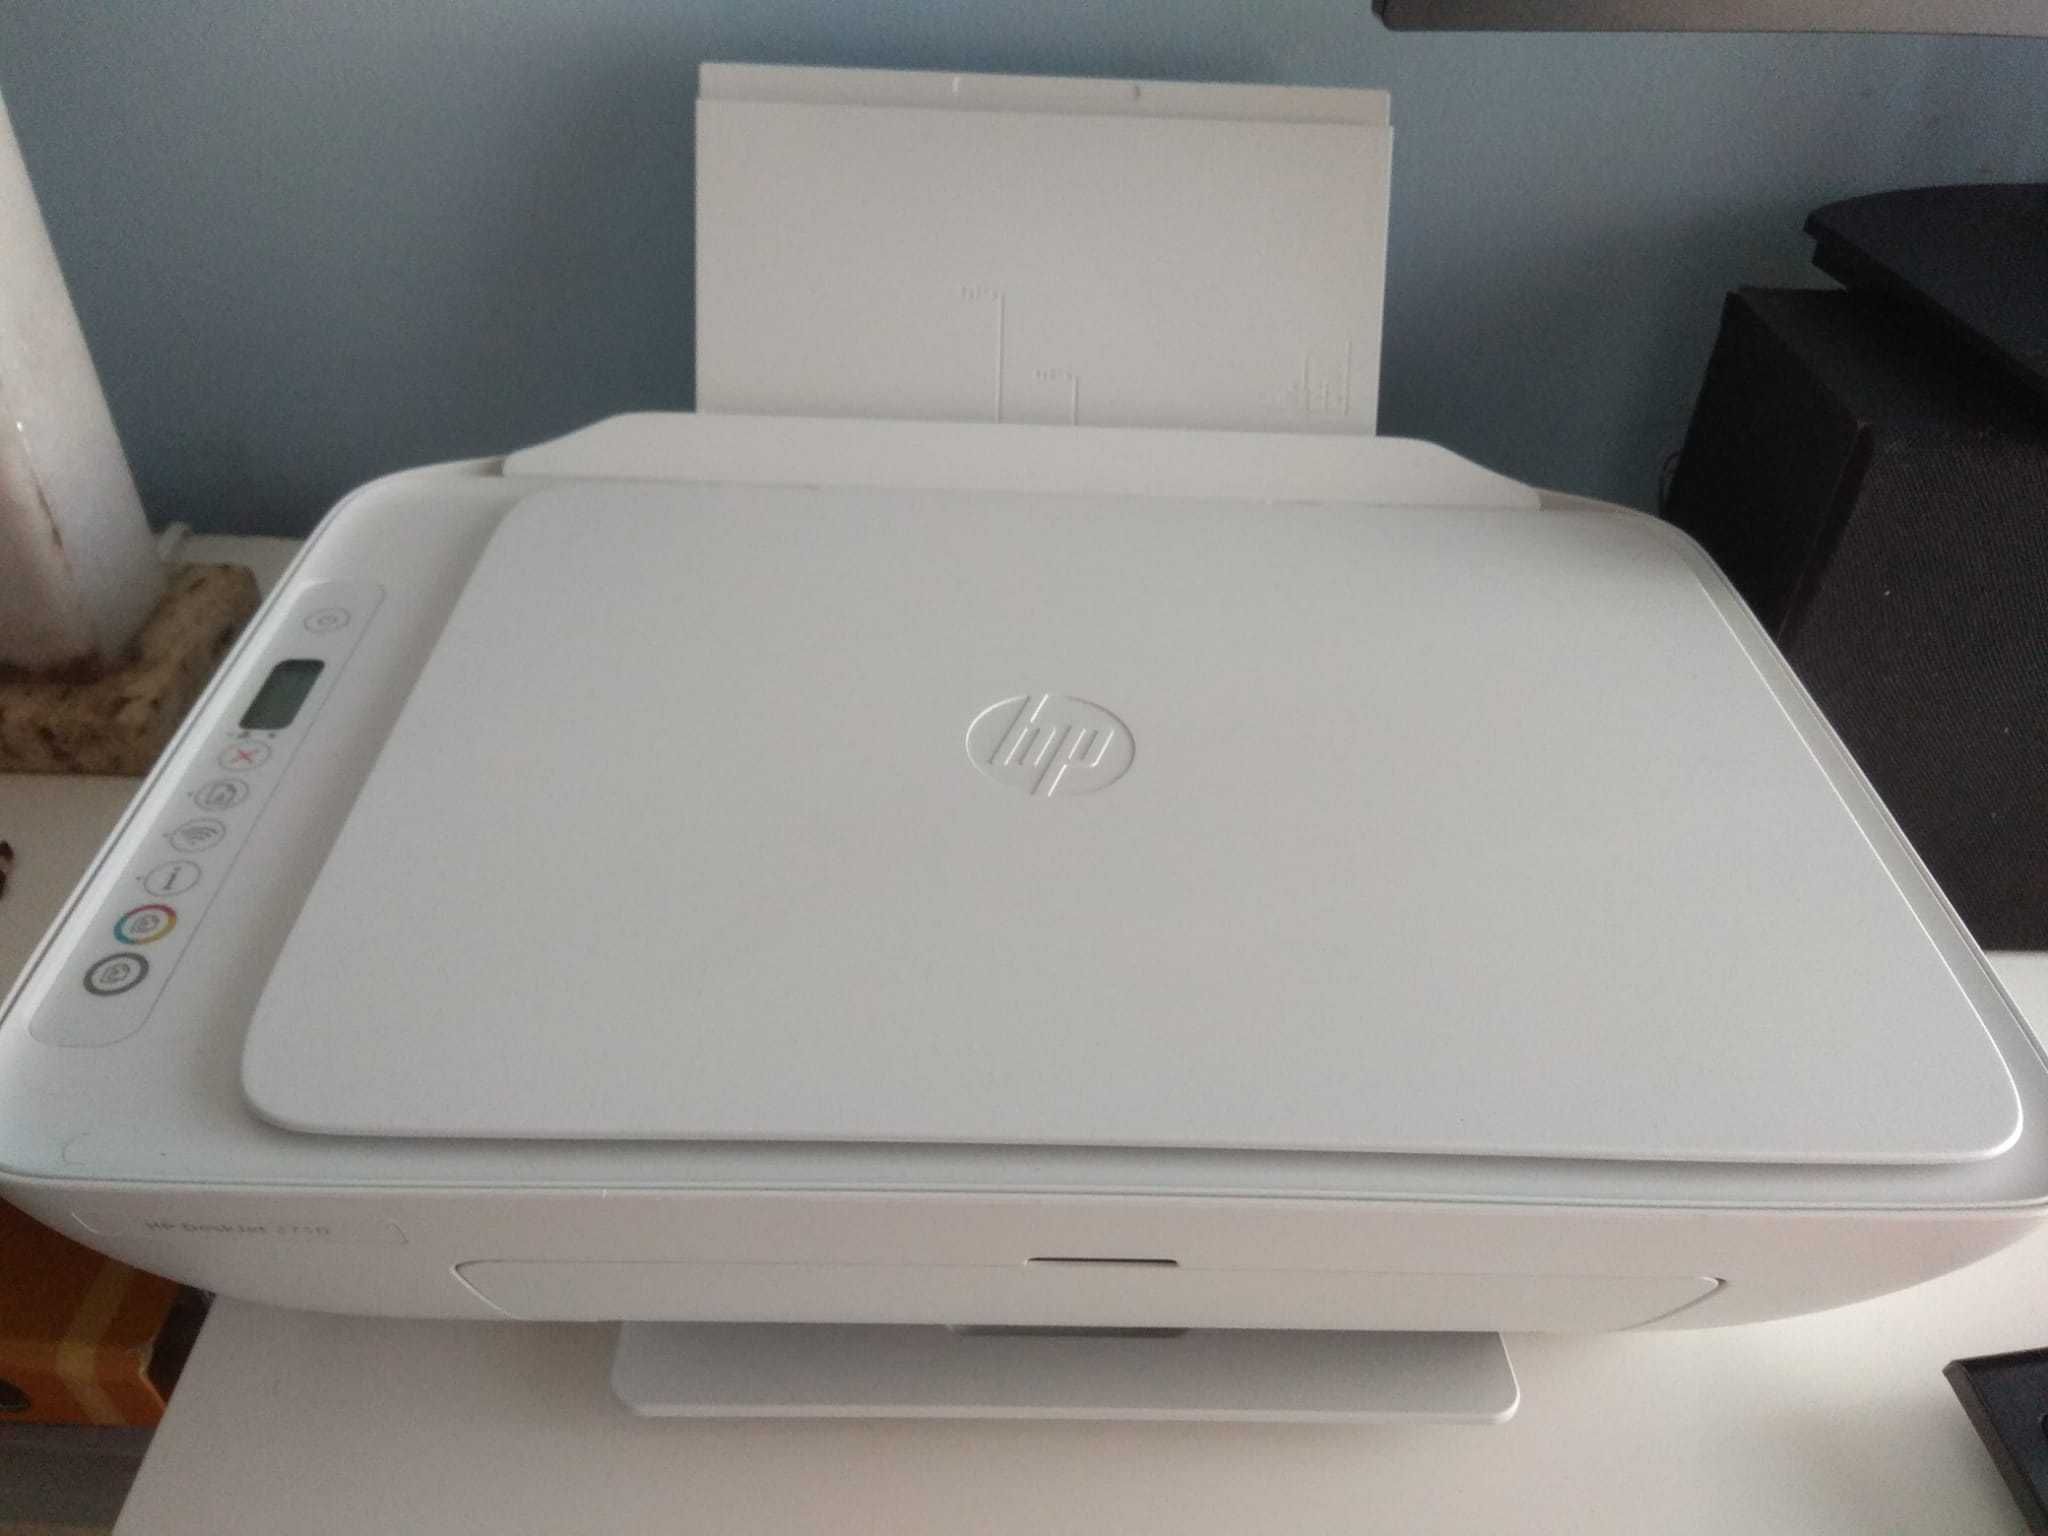 Impressora HP DESKJET 2710 HI-FI, com digitalizador.